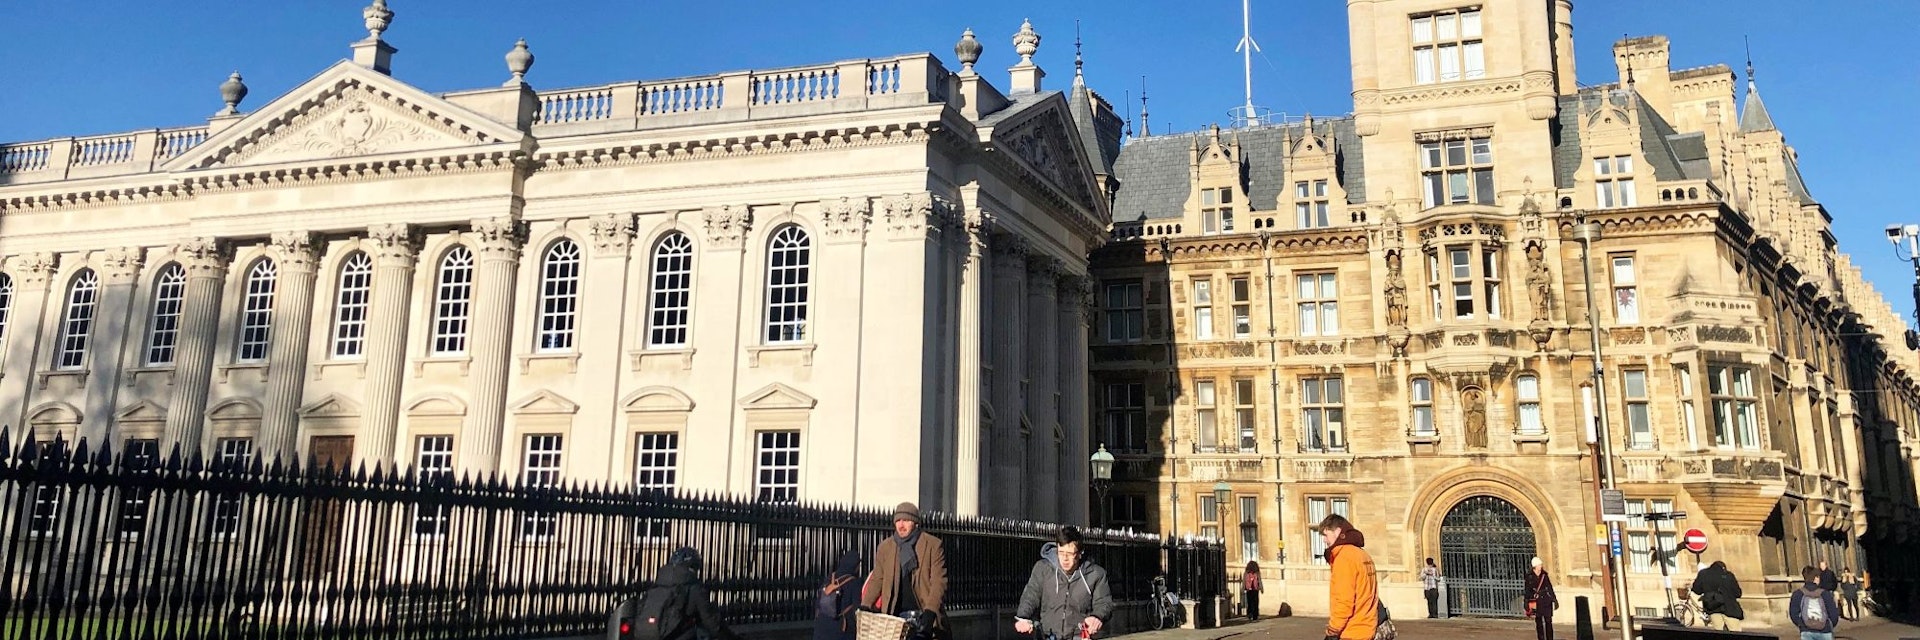 Cambridge, United Kingdom - January 17, 2019: The Senate House and Gonville & Caius College, University of Cambridge